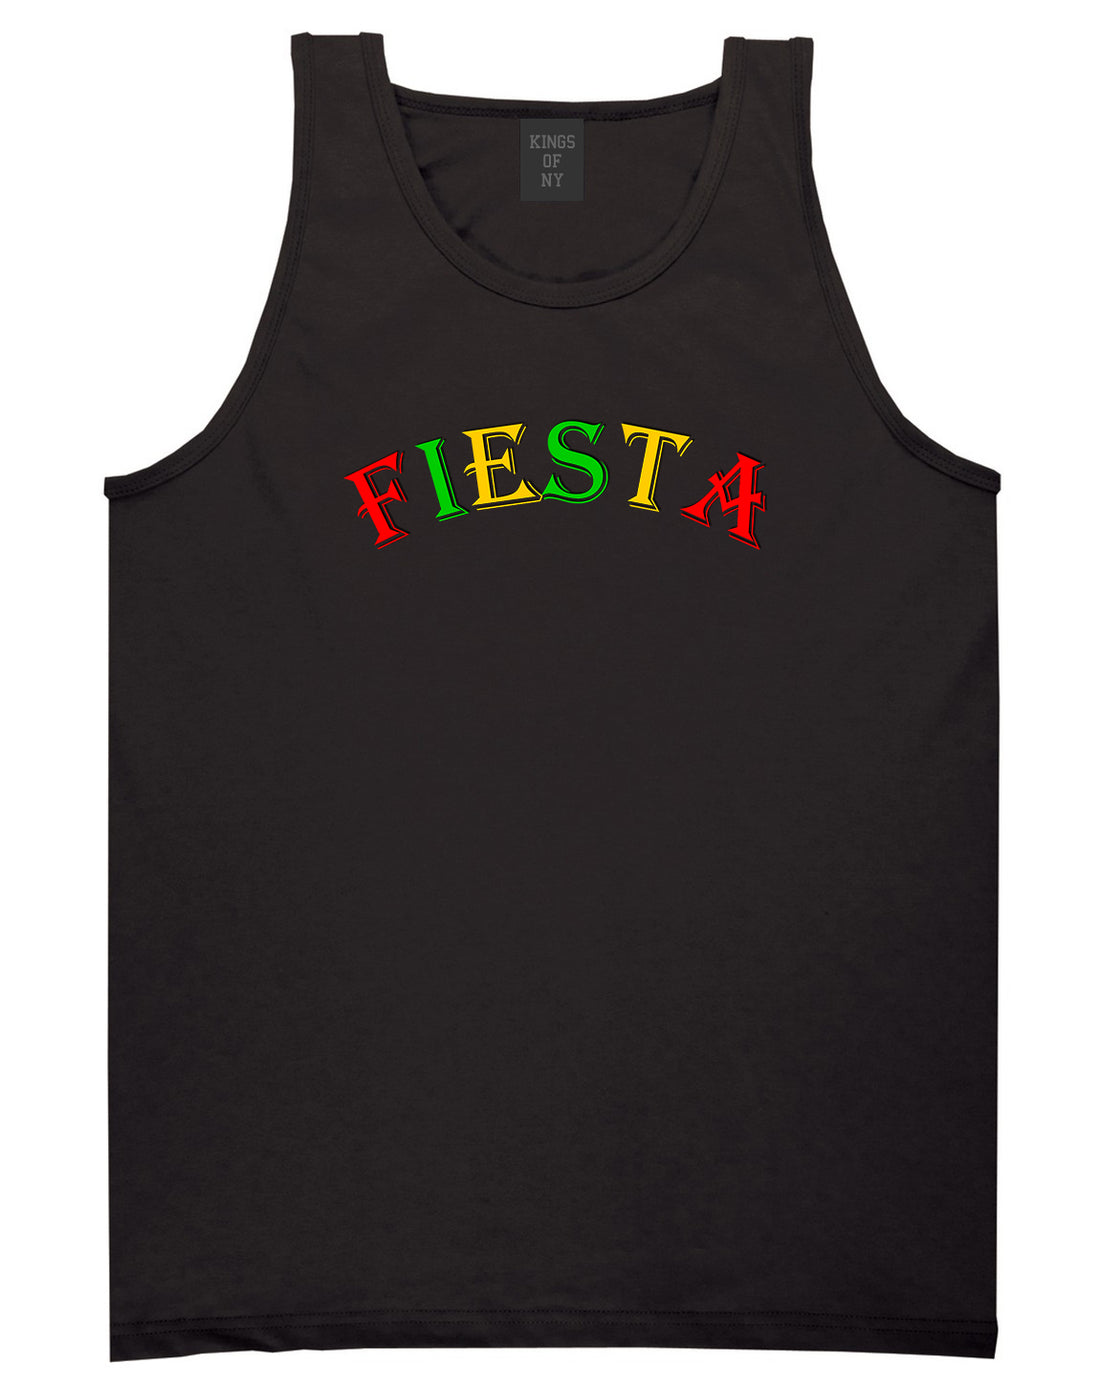 Fiesta Party Cinco De Mayo Mens Black Tank Top Shirt by KINGS OF NY